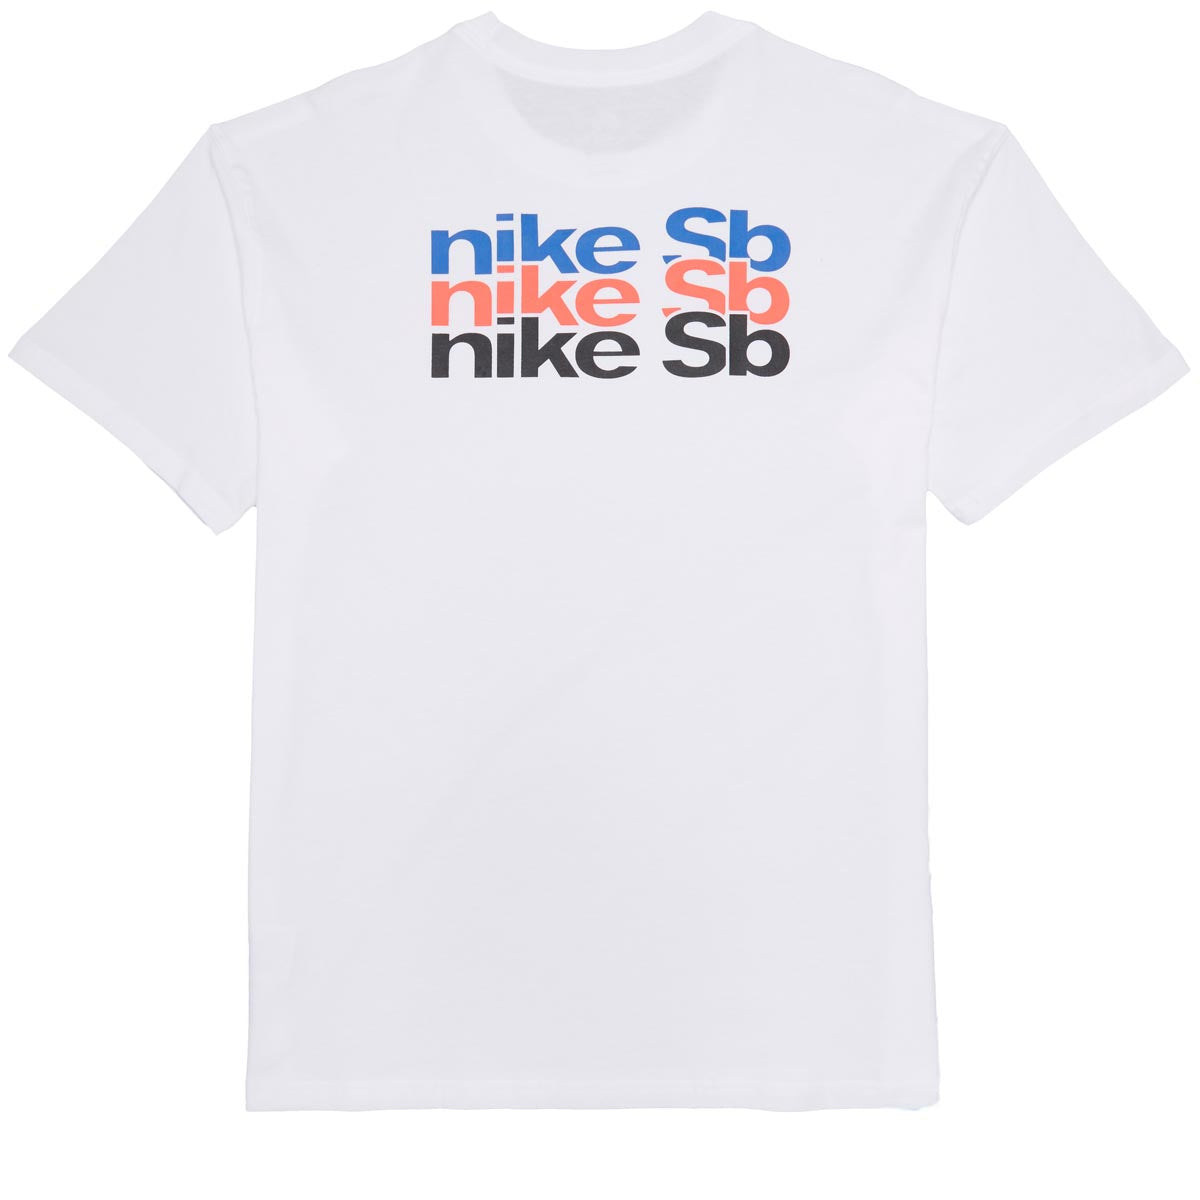 Nike SB Anchored T-Shirt - White image 1